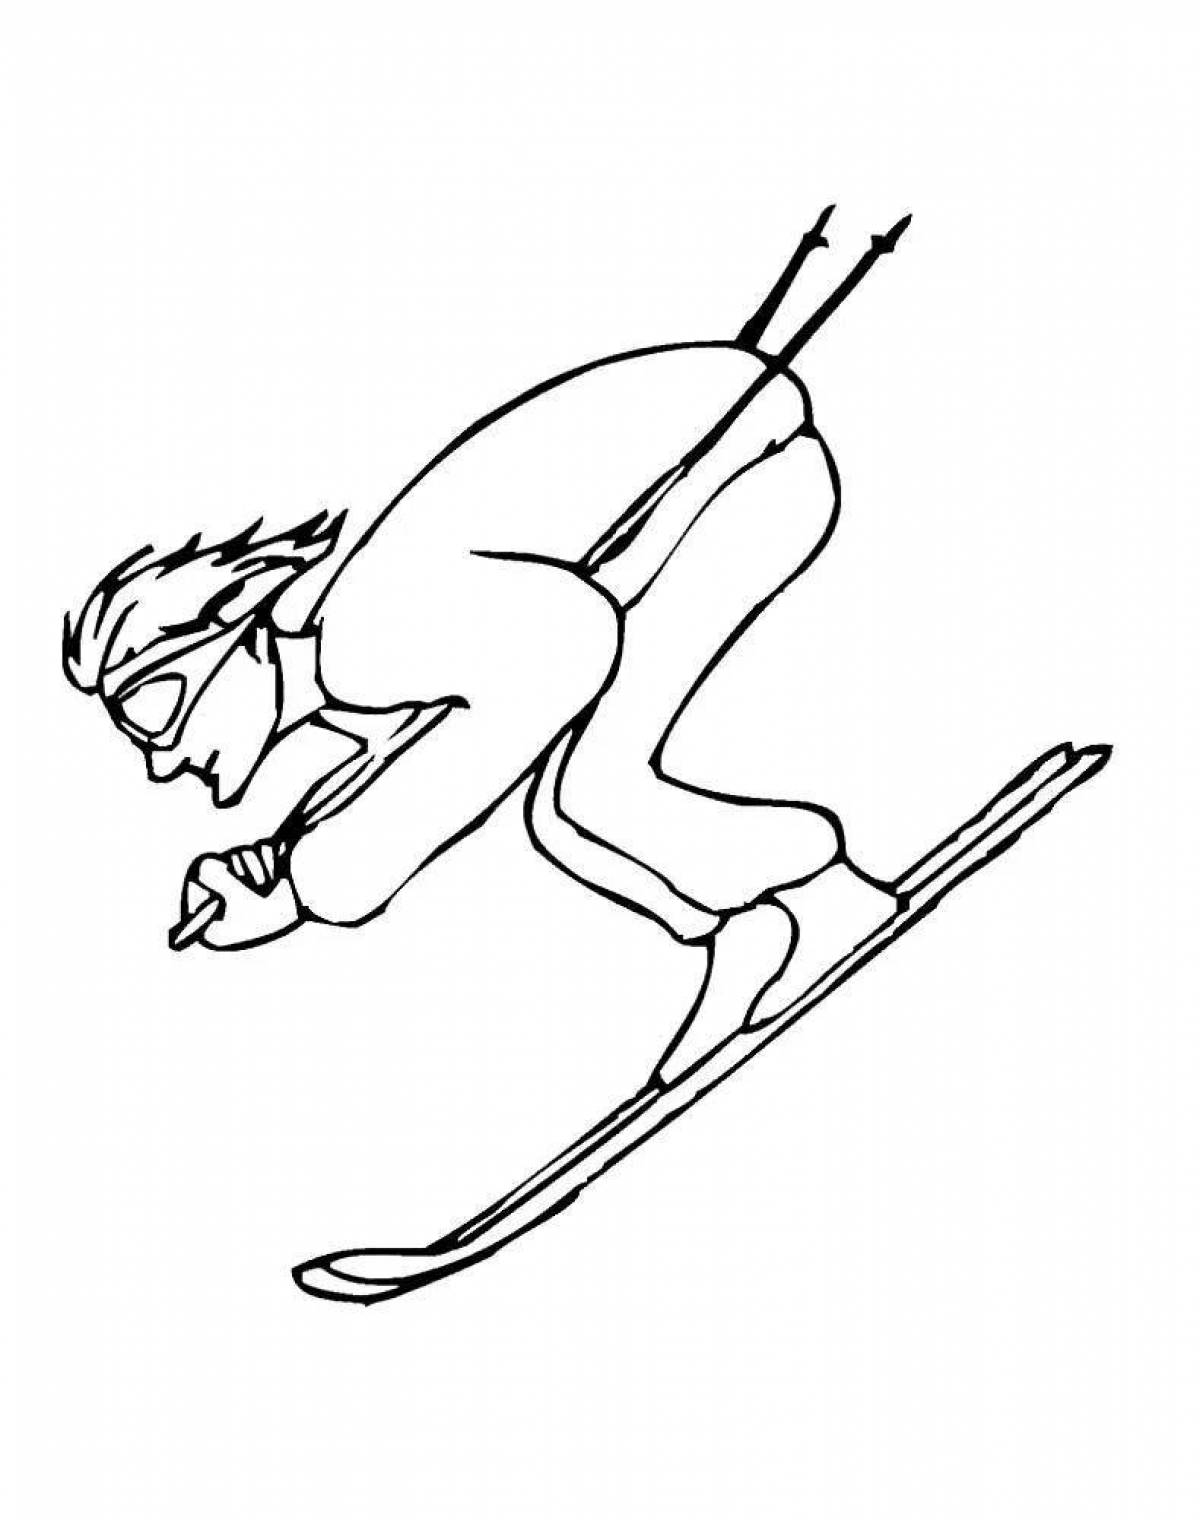 Bright man on skis